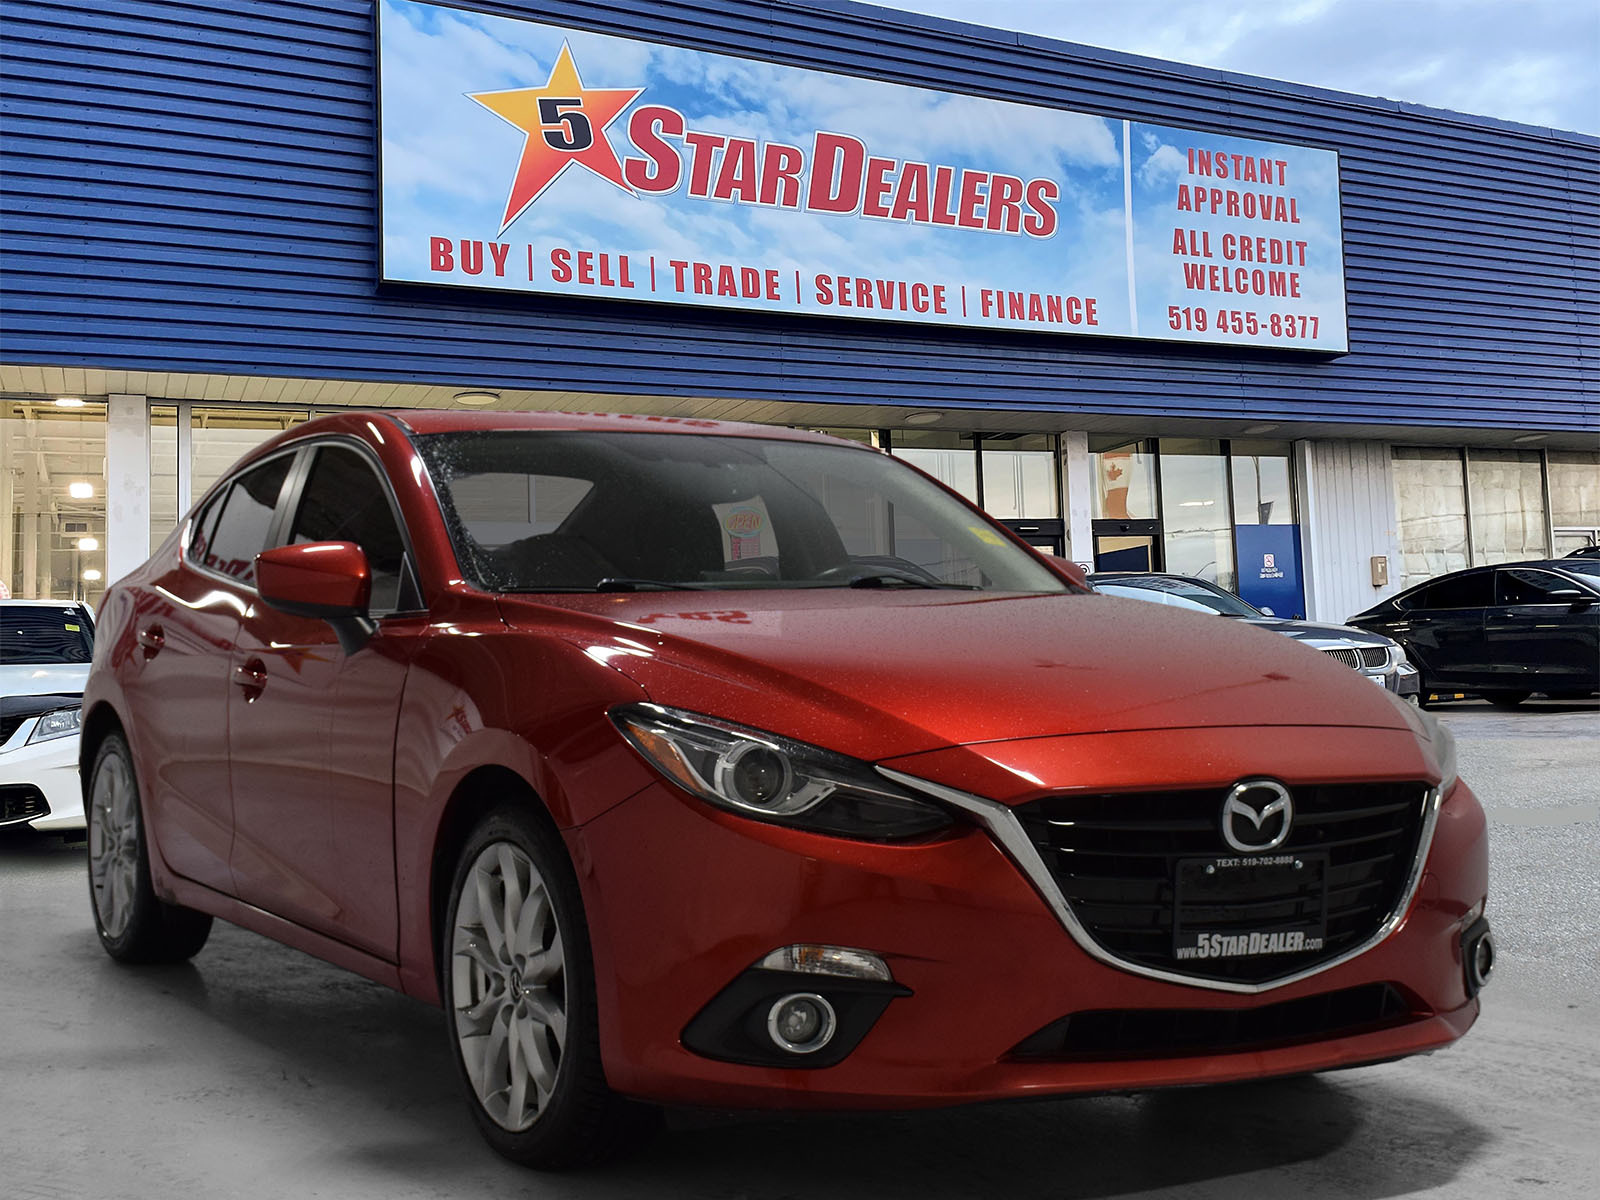 2015 Mazda Mazda3 NAV LEATHER SUNROOF LOADED! WE FINANCE ALL CREDIT